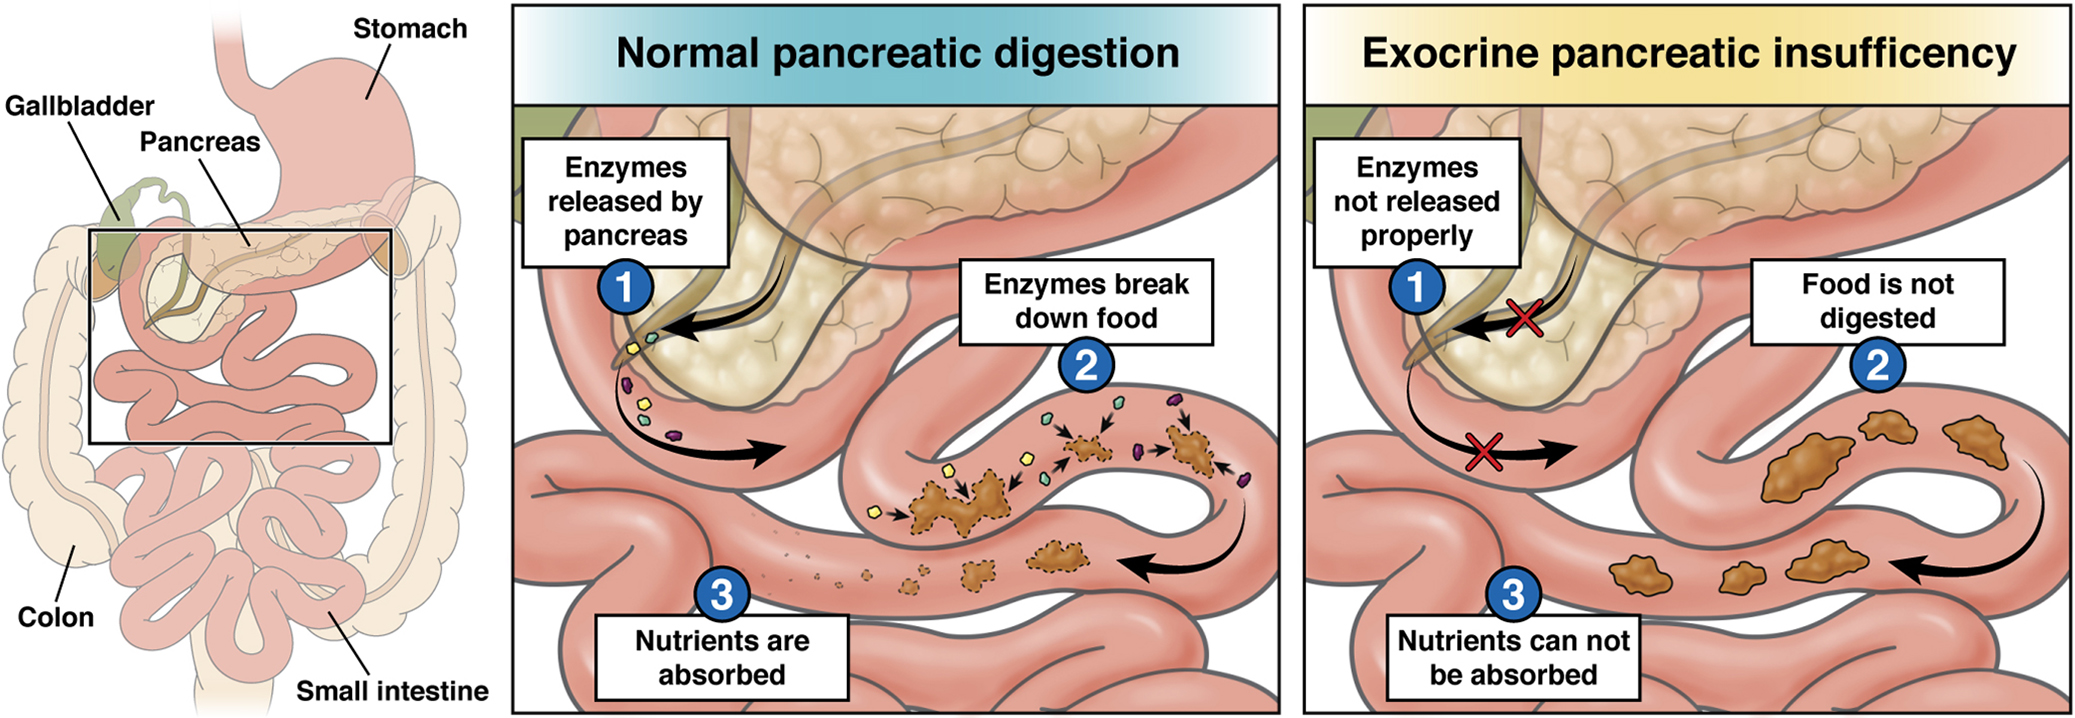 Exocrine Pancreatic Insufficiency Epi Aga Gi Patient Center